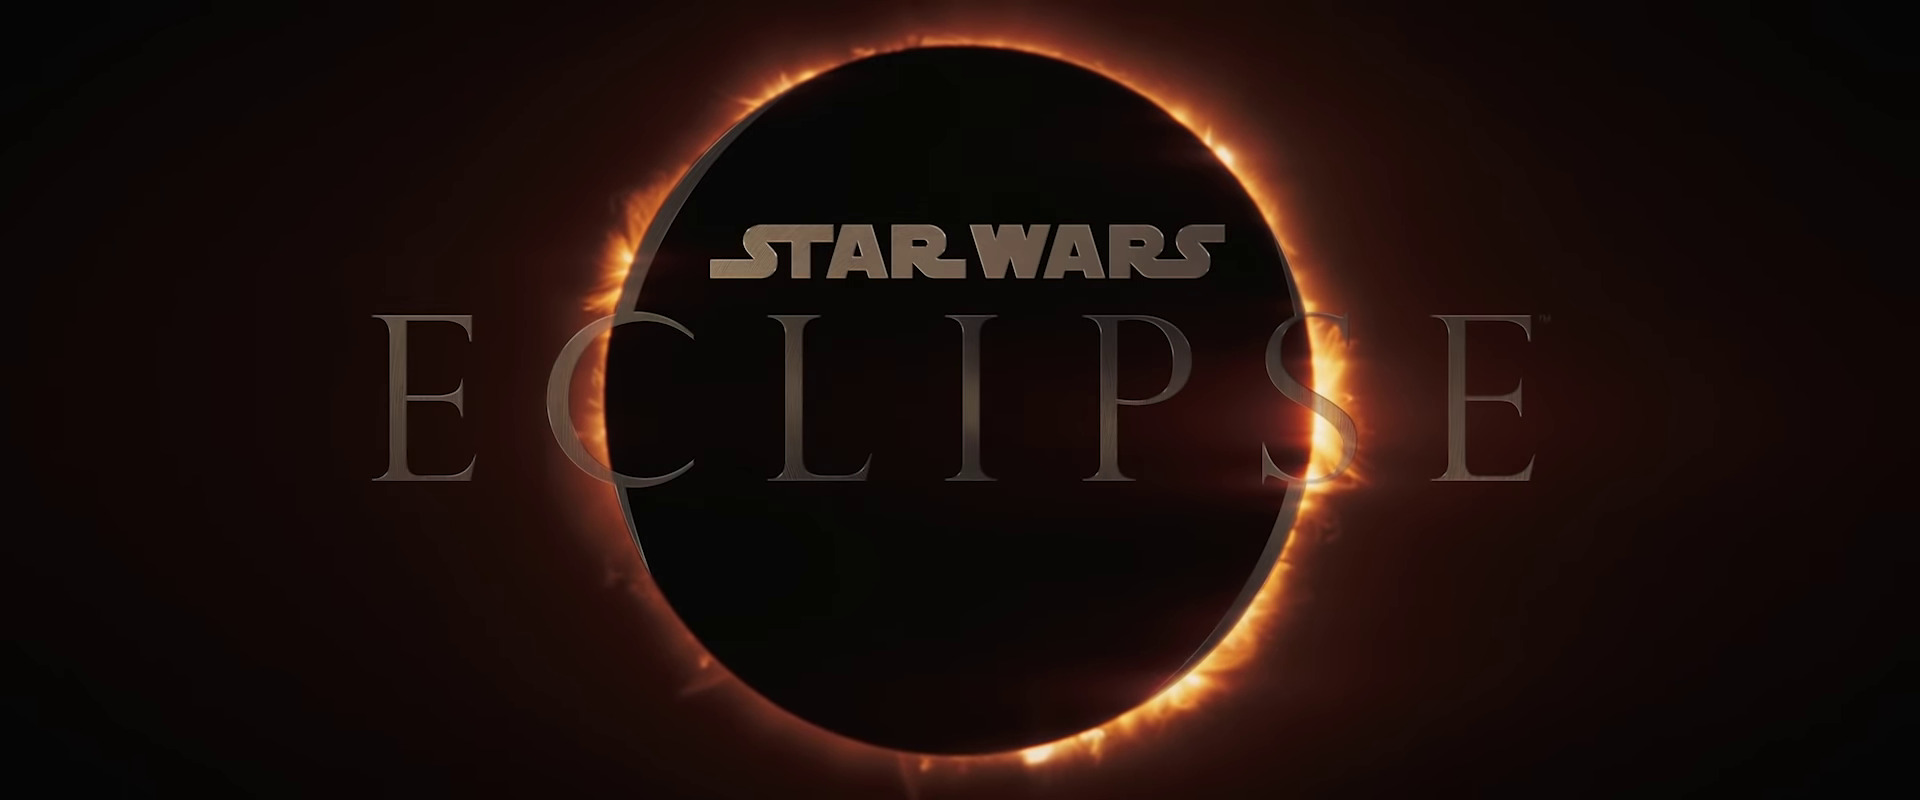 Star Wars Eclipse Novo Game Pela Quantic Dream NPC GAMES